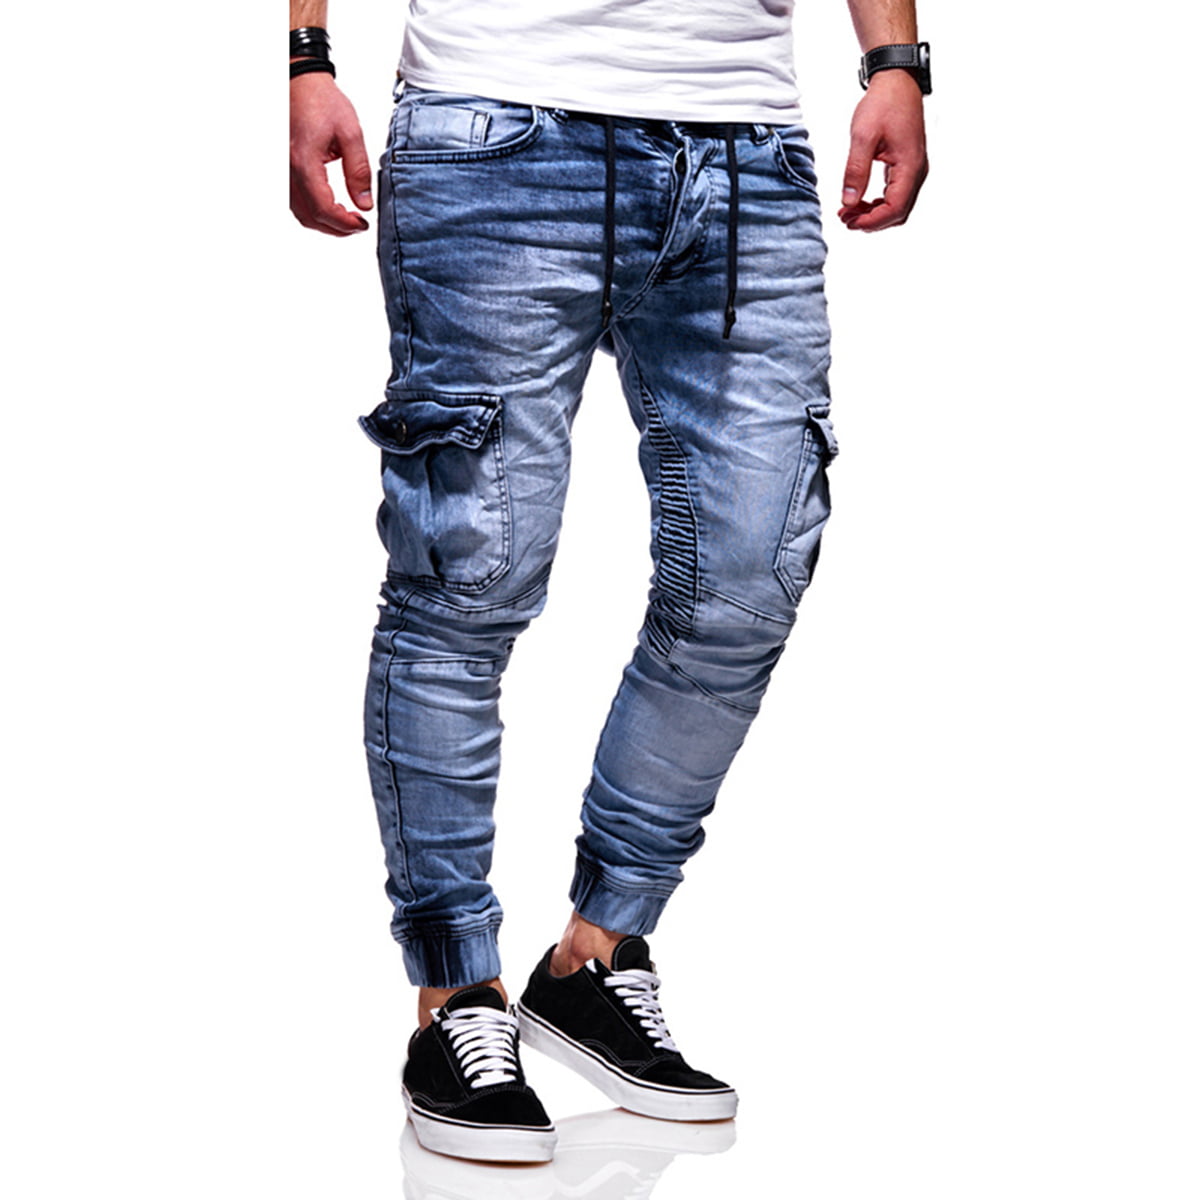 Melbourne Outlook kever Lovaru S-3XL Mens Skinny Jeans Denim Pant with Pockets - Walmart.com